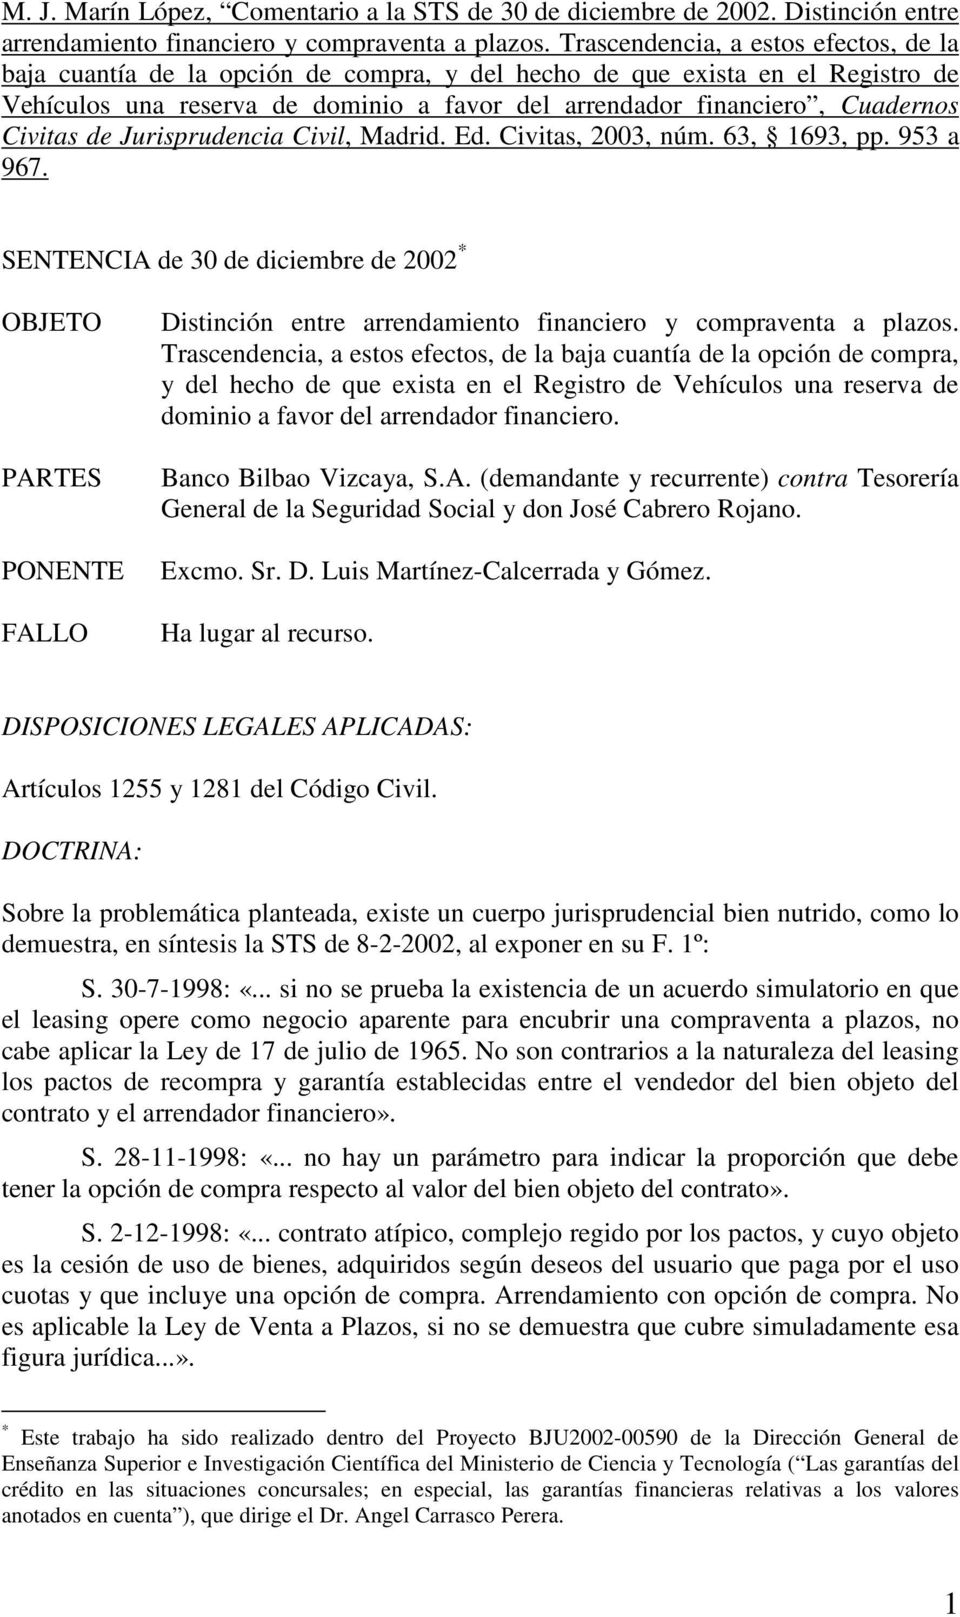 Civitas de Jurisprudencia Civil, Madrid. Ed. Civitas, 2003, núm. 63, 1693, pp. 953 a 967.